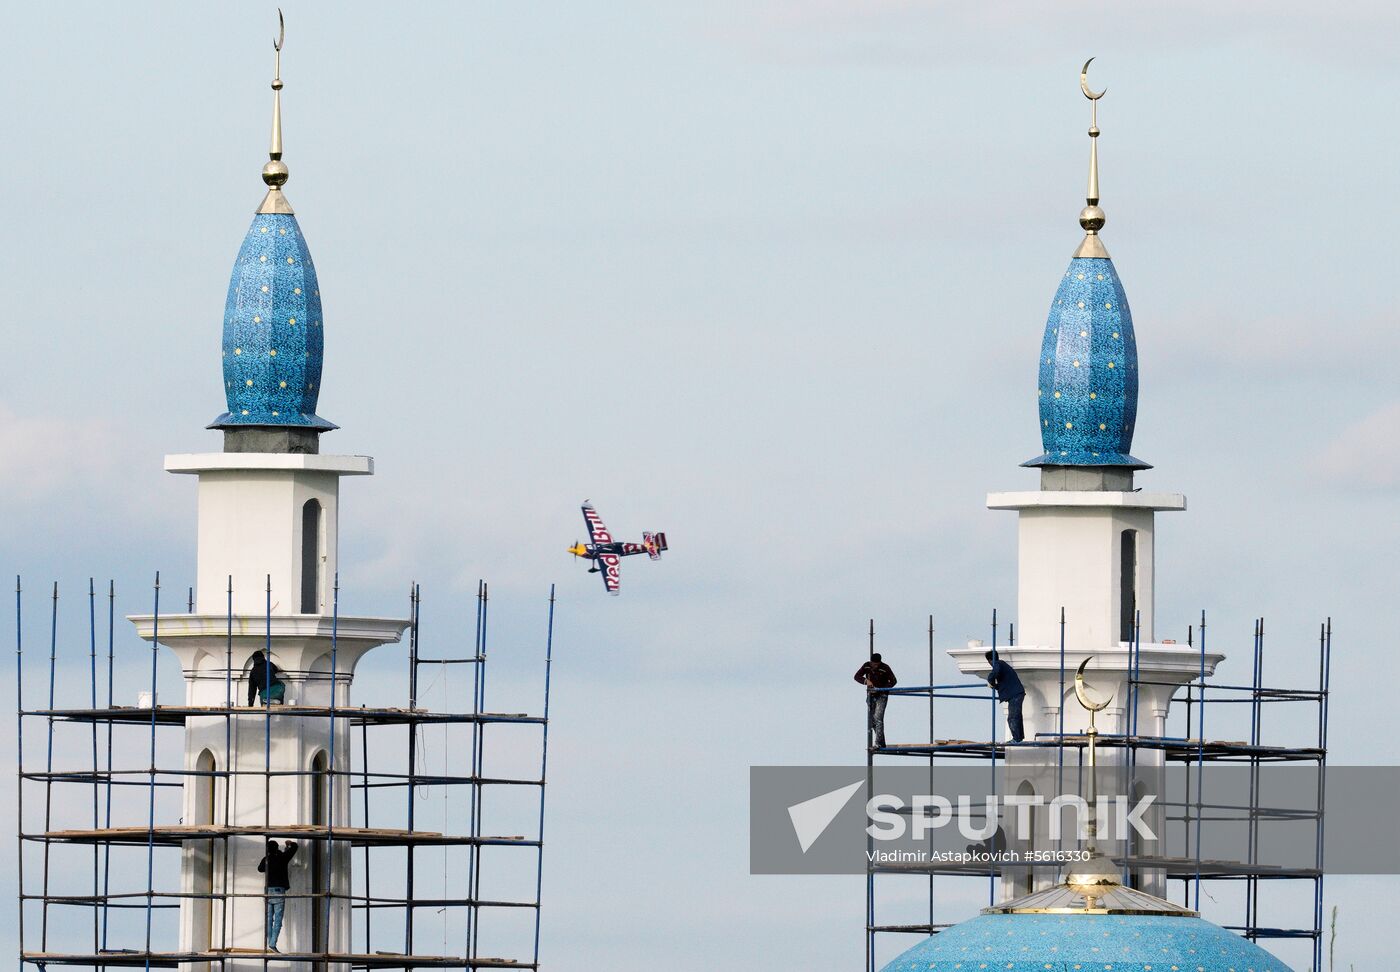 Red Bull Air Race in Kazan. Training session